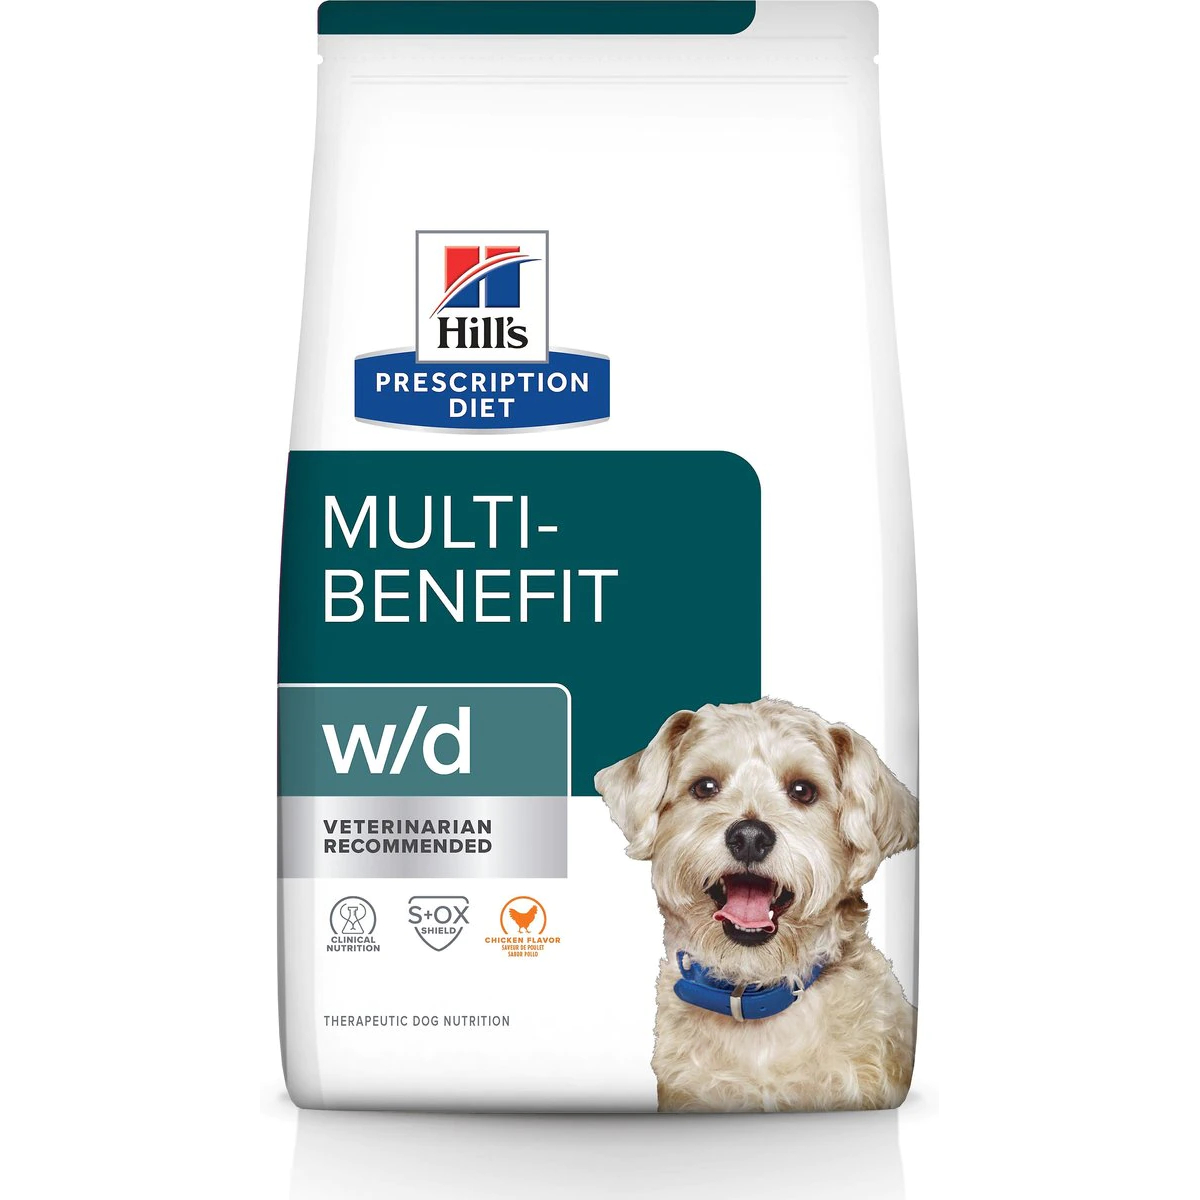 Hill's Prescription Diet w_d Multi-Benefit Chicken Flavor Dry Dog Food